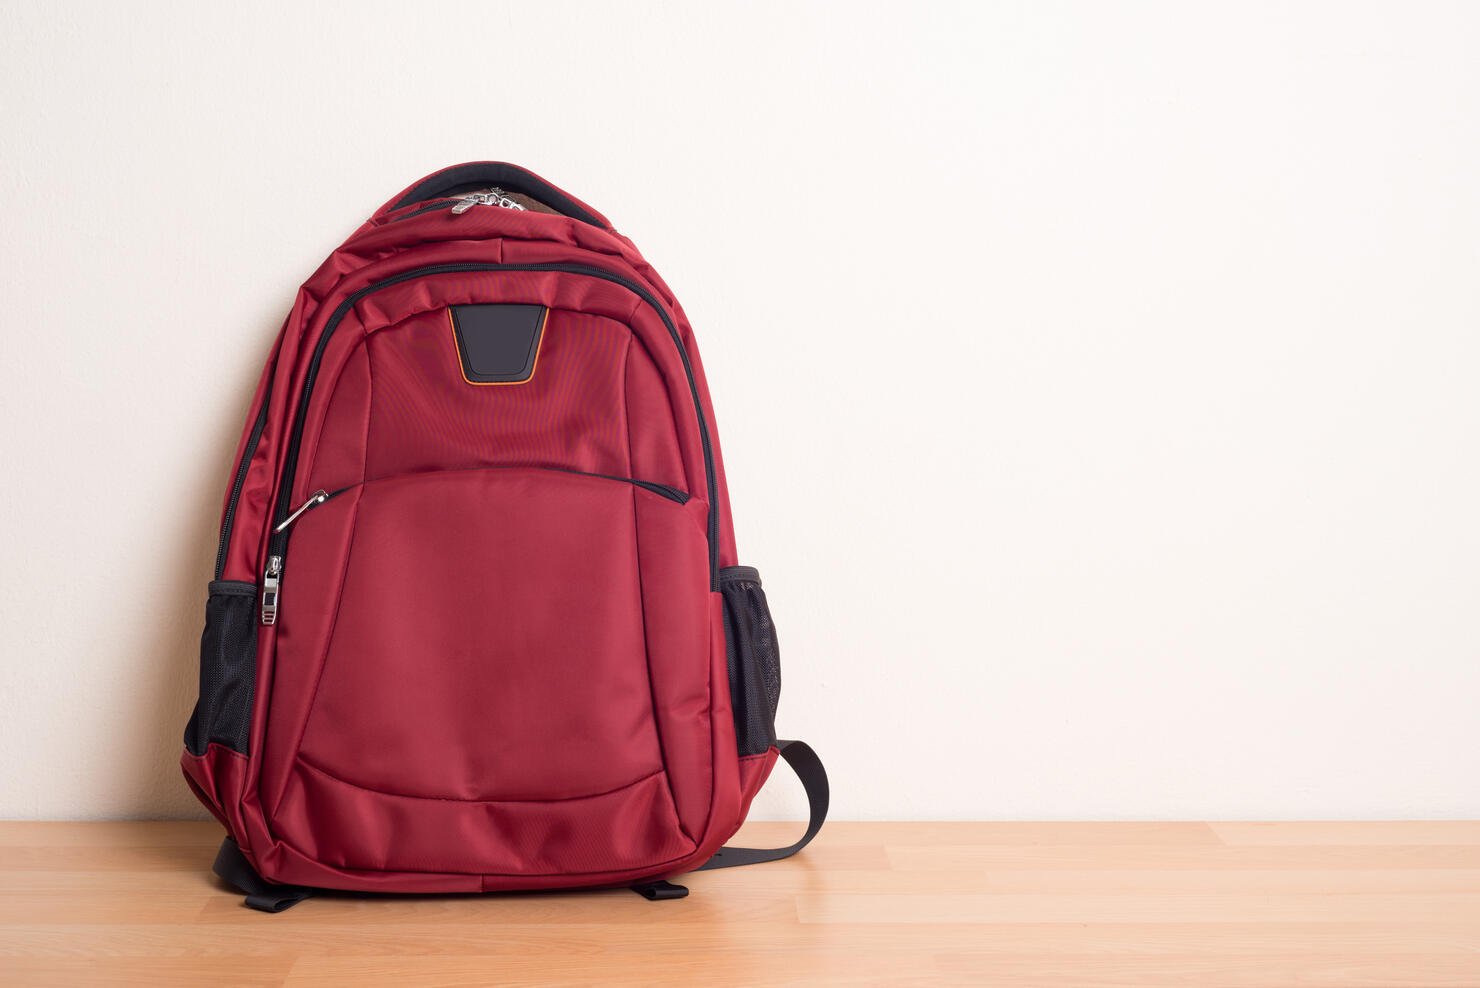 Red Backpack On Hardwood Floor Against Wall